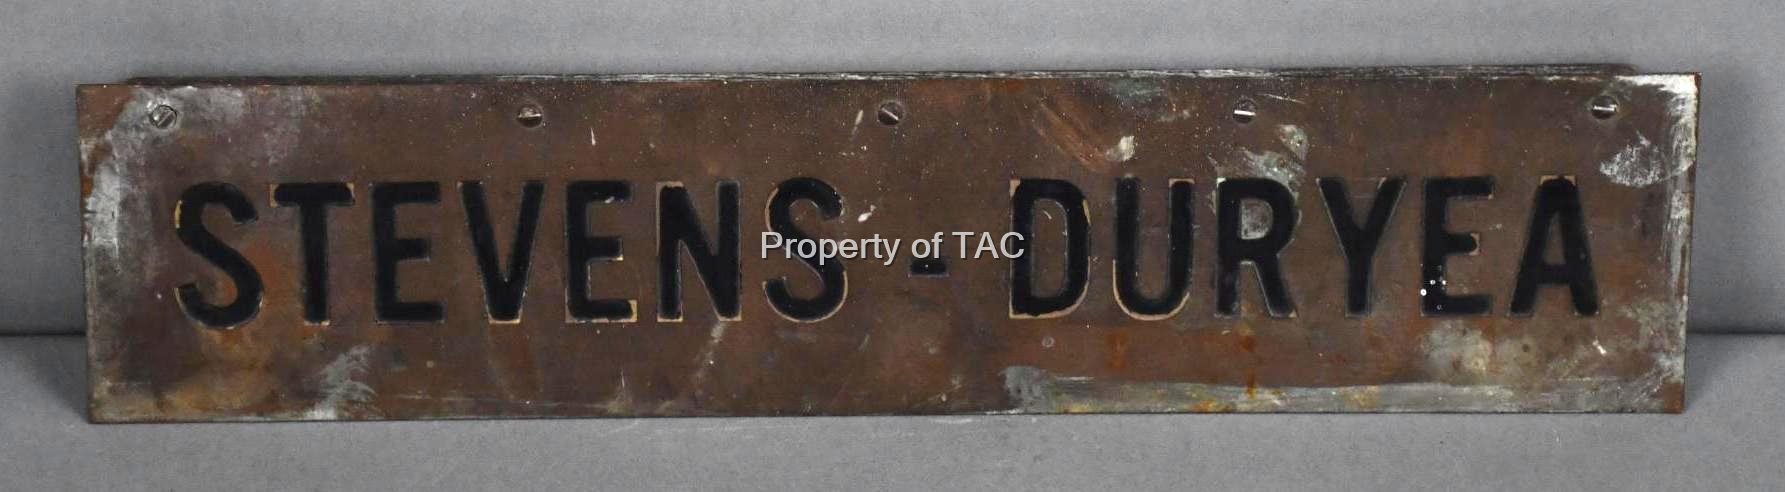 Stevens  -Duryea (Automobile Co.) Brass Sign